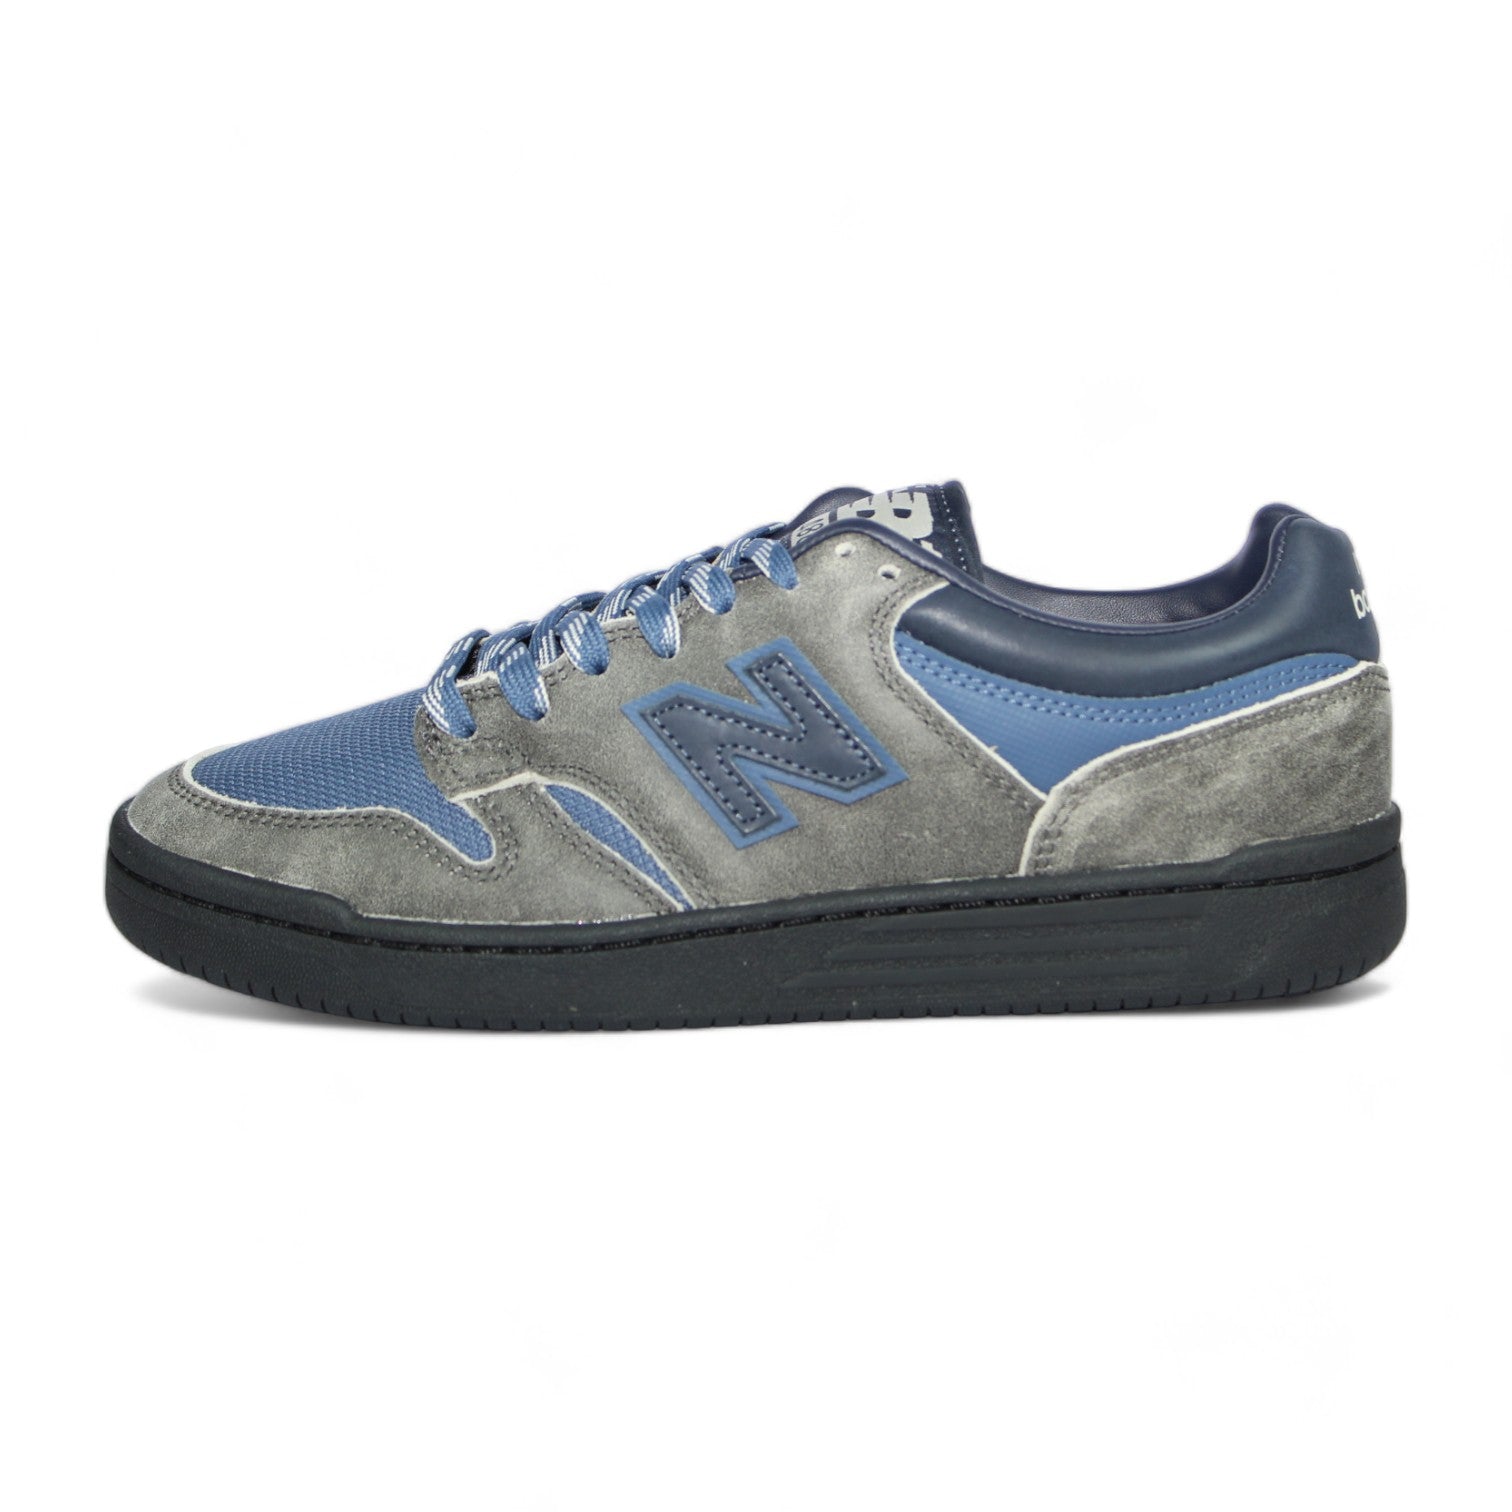 NB Numeric 480 Trail Pack NM480TRL Shoes - Grey/Blue